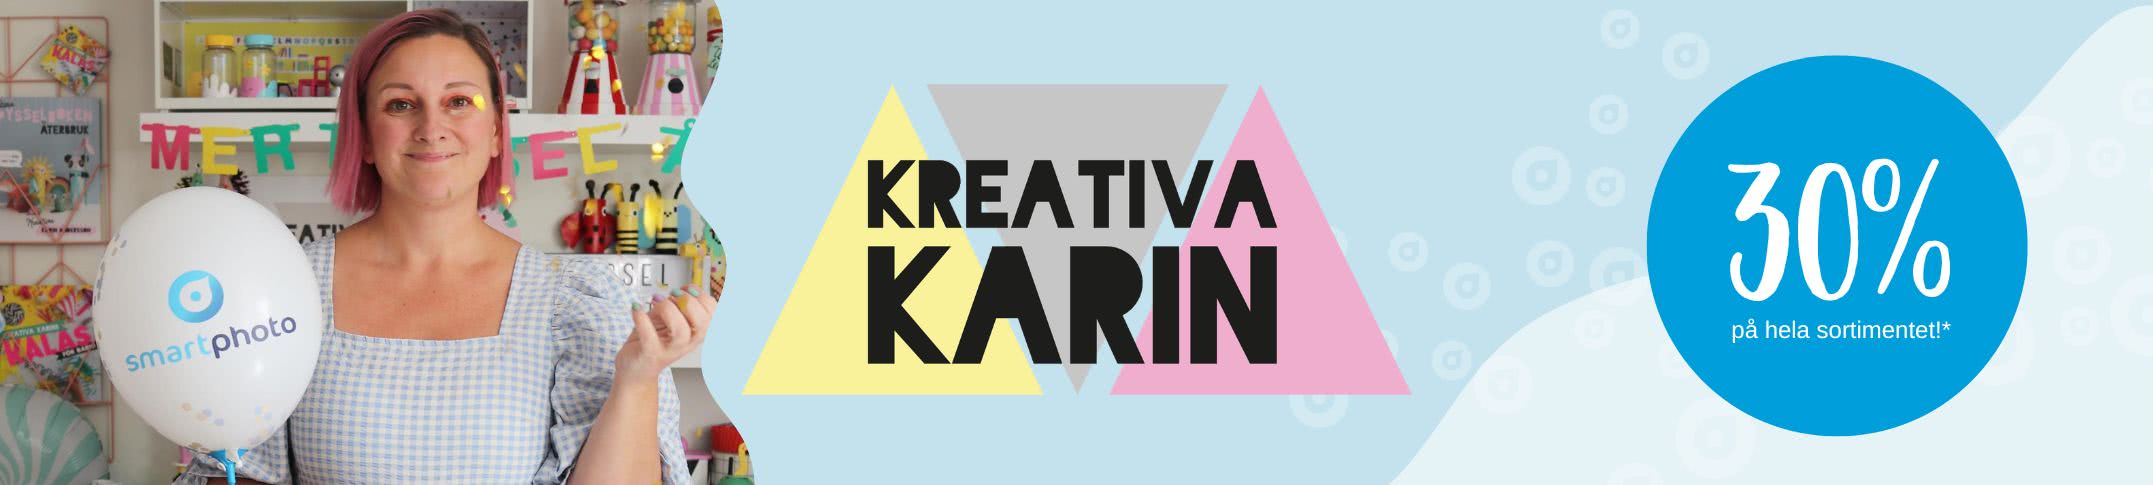 Kreativa Karin - Pysseldrottningen